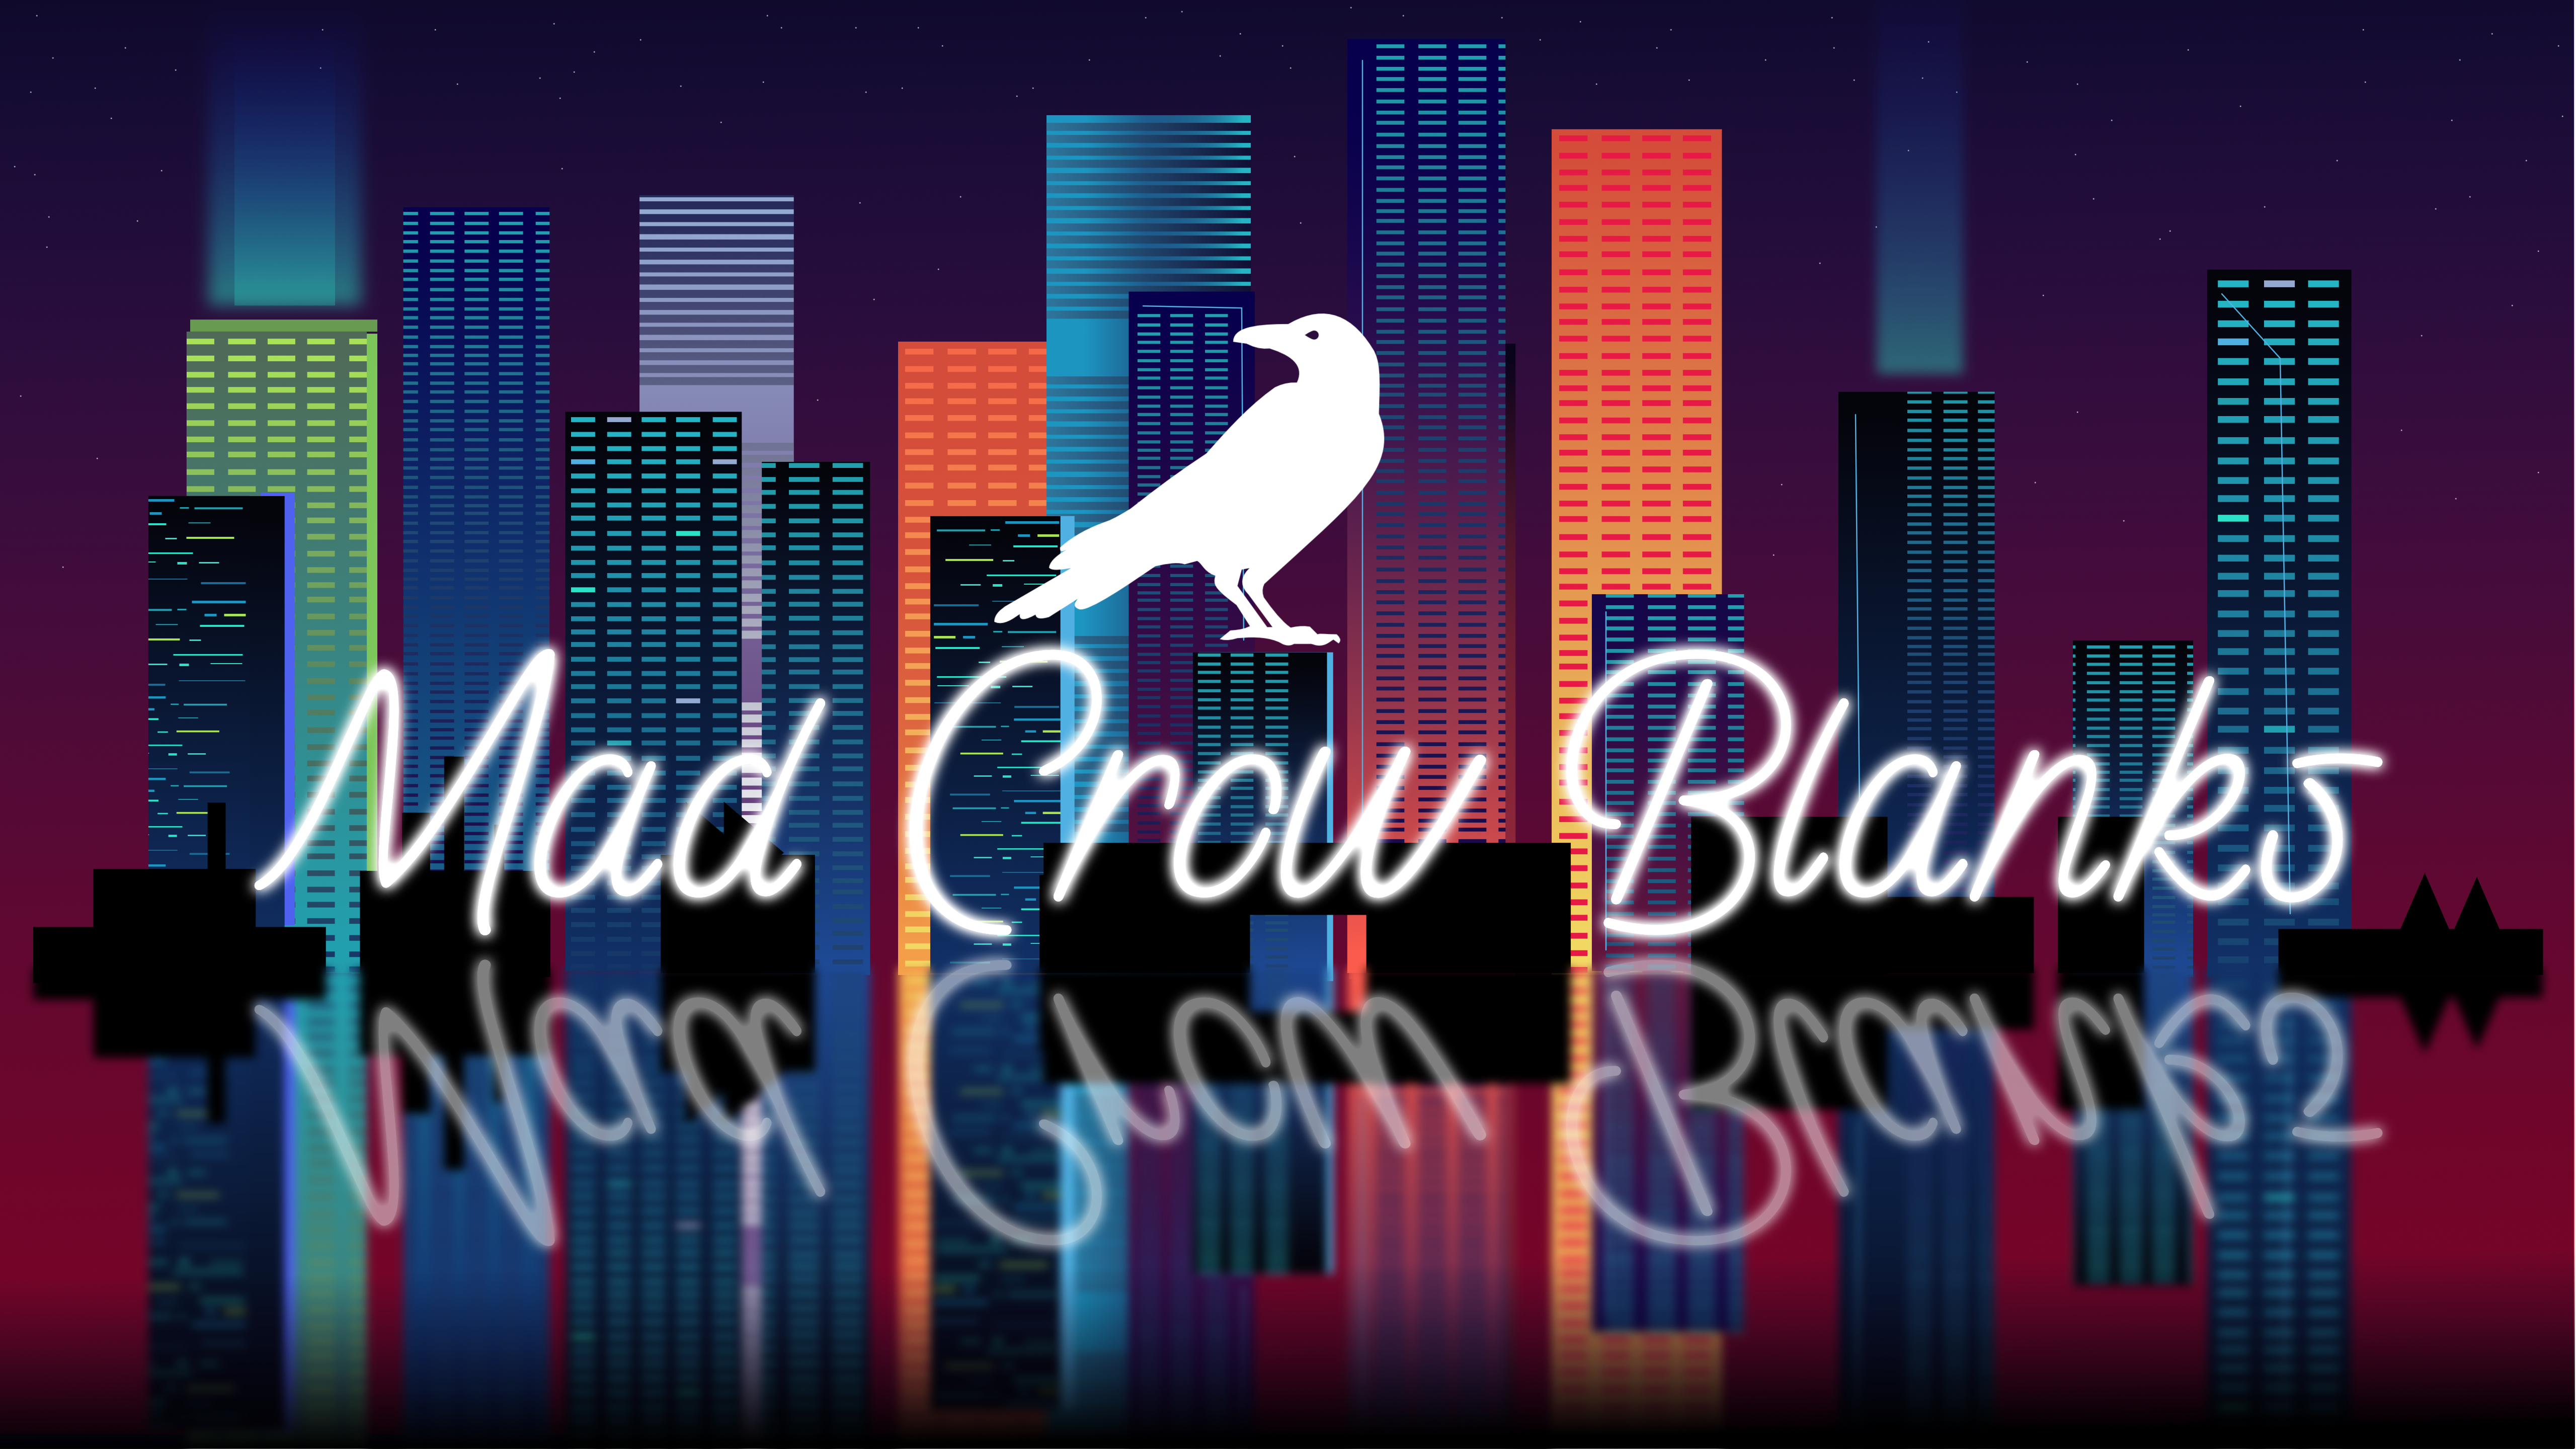 Mad Crow Blanks